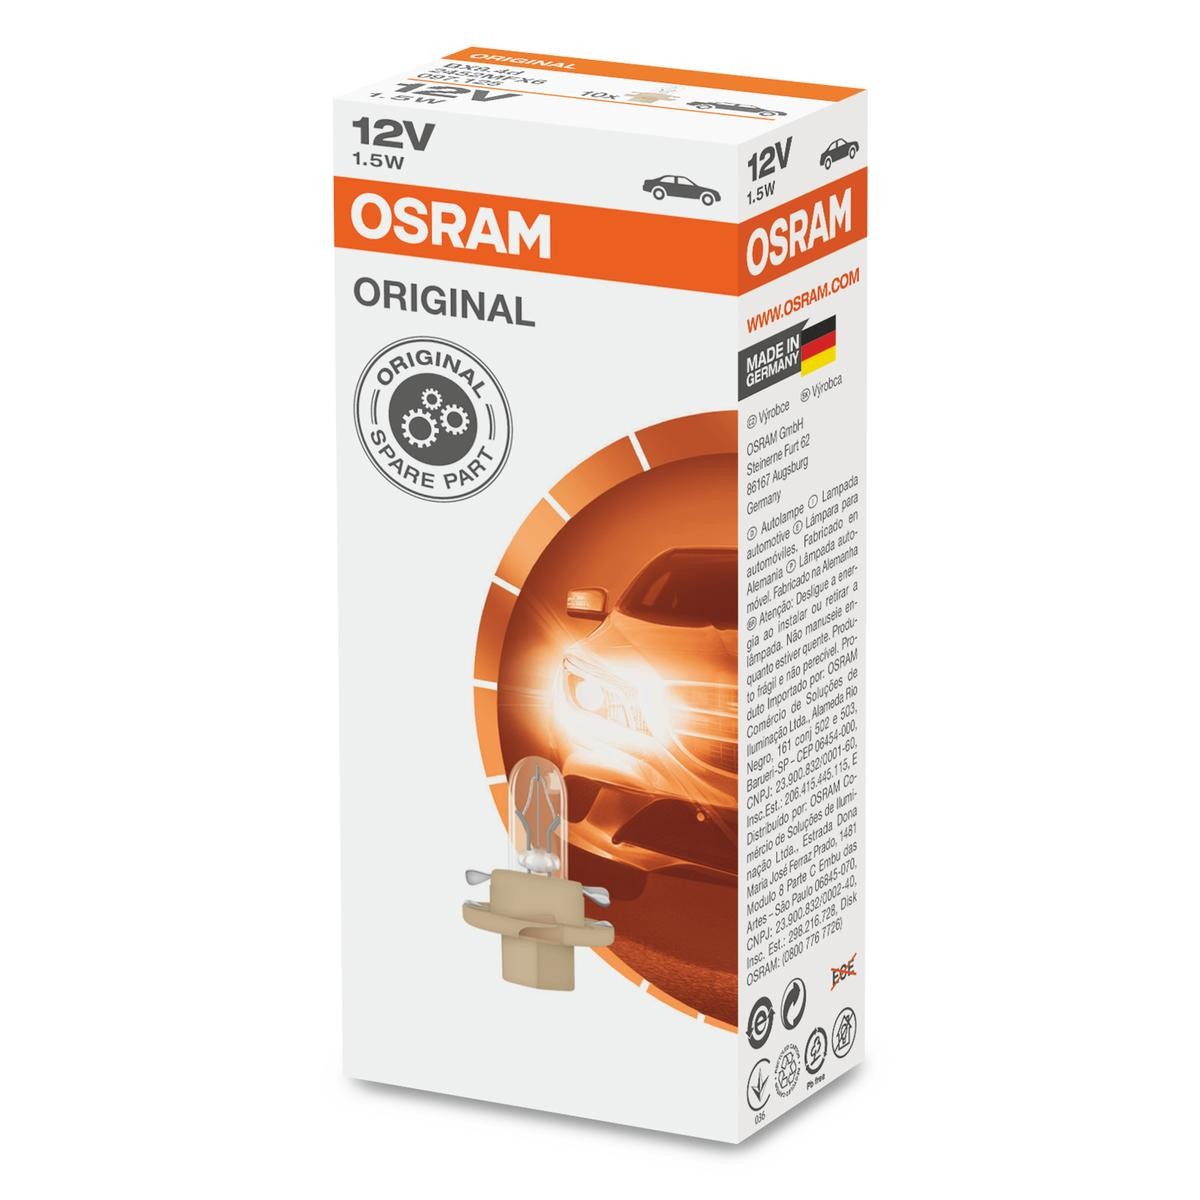 OSRAM ORIGINAL LINE 2452MFX6 Dashboard bulb 12V 1,5W, Socket Bulb, ORIGINAL, BX8.4d